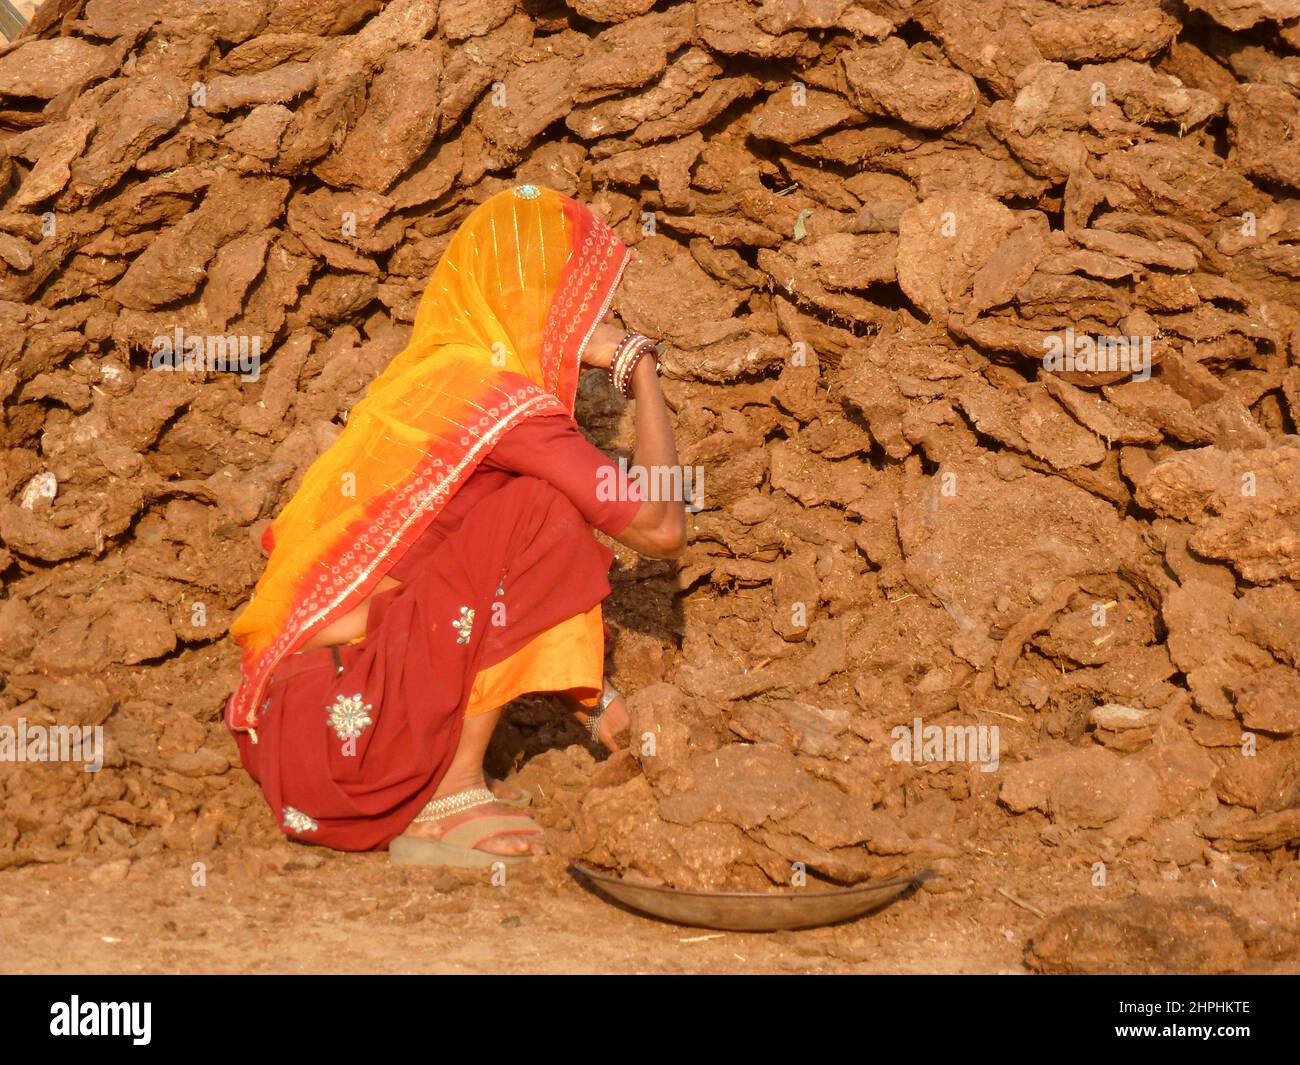 collecting dung at camelfair in Pushkar, Rajasthan, India Stock Photo